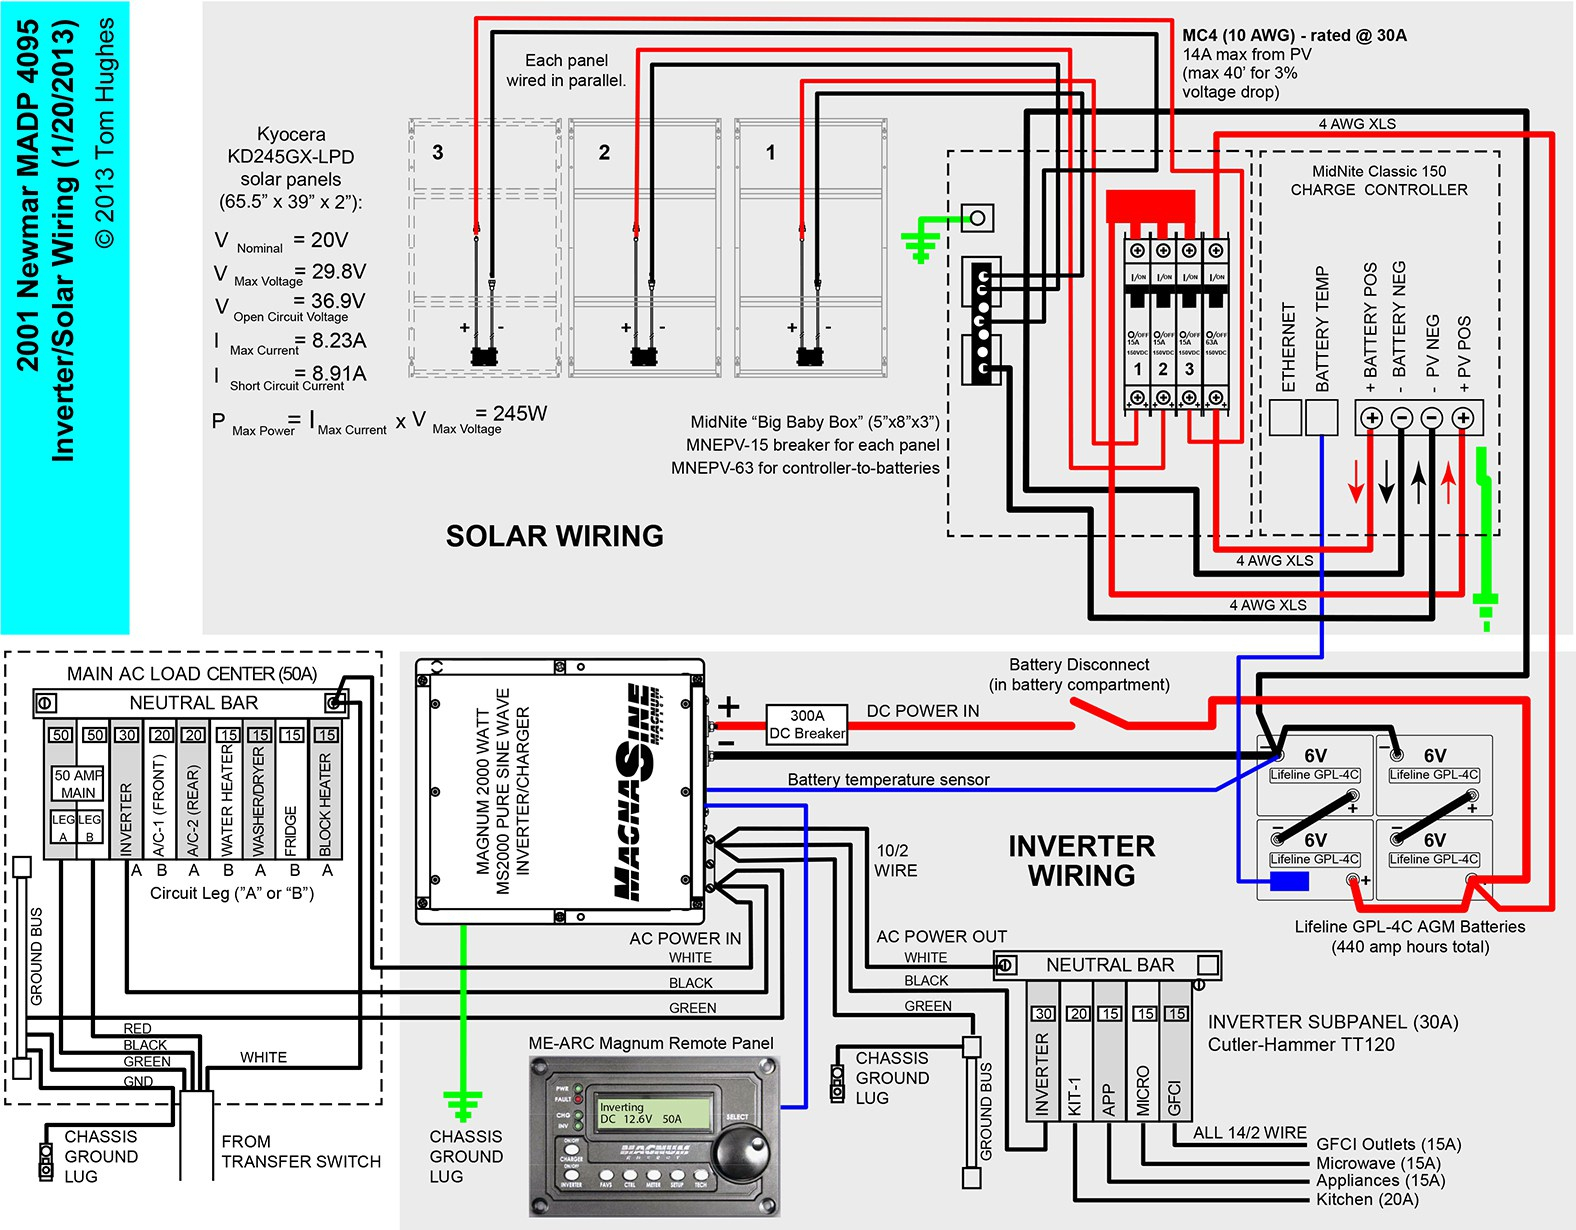 Rv Converter Wiring Diagram And Power In Jpg In Rv Power Converter - Rv Power Converter Wiring Diagram